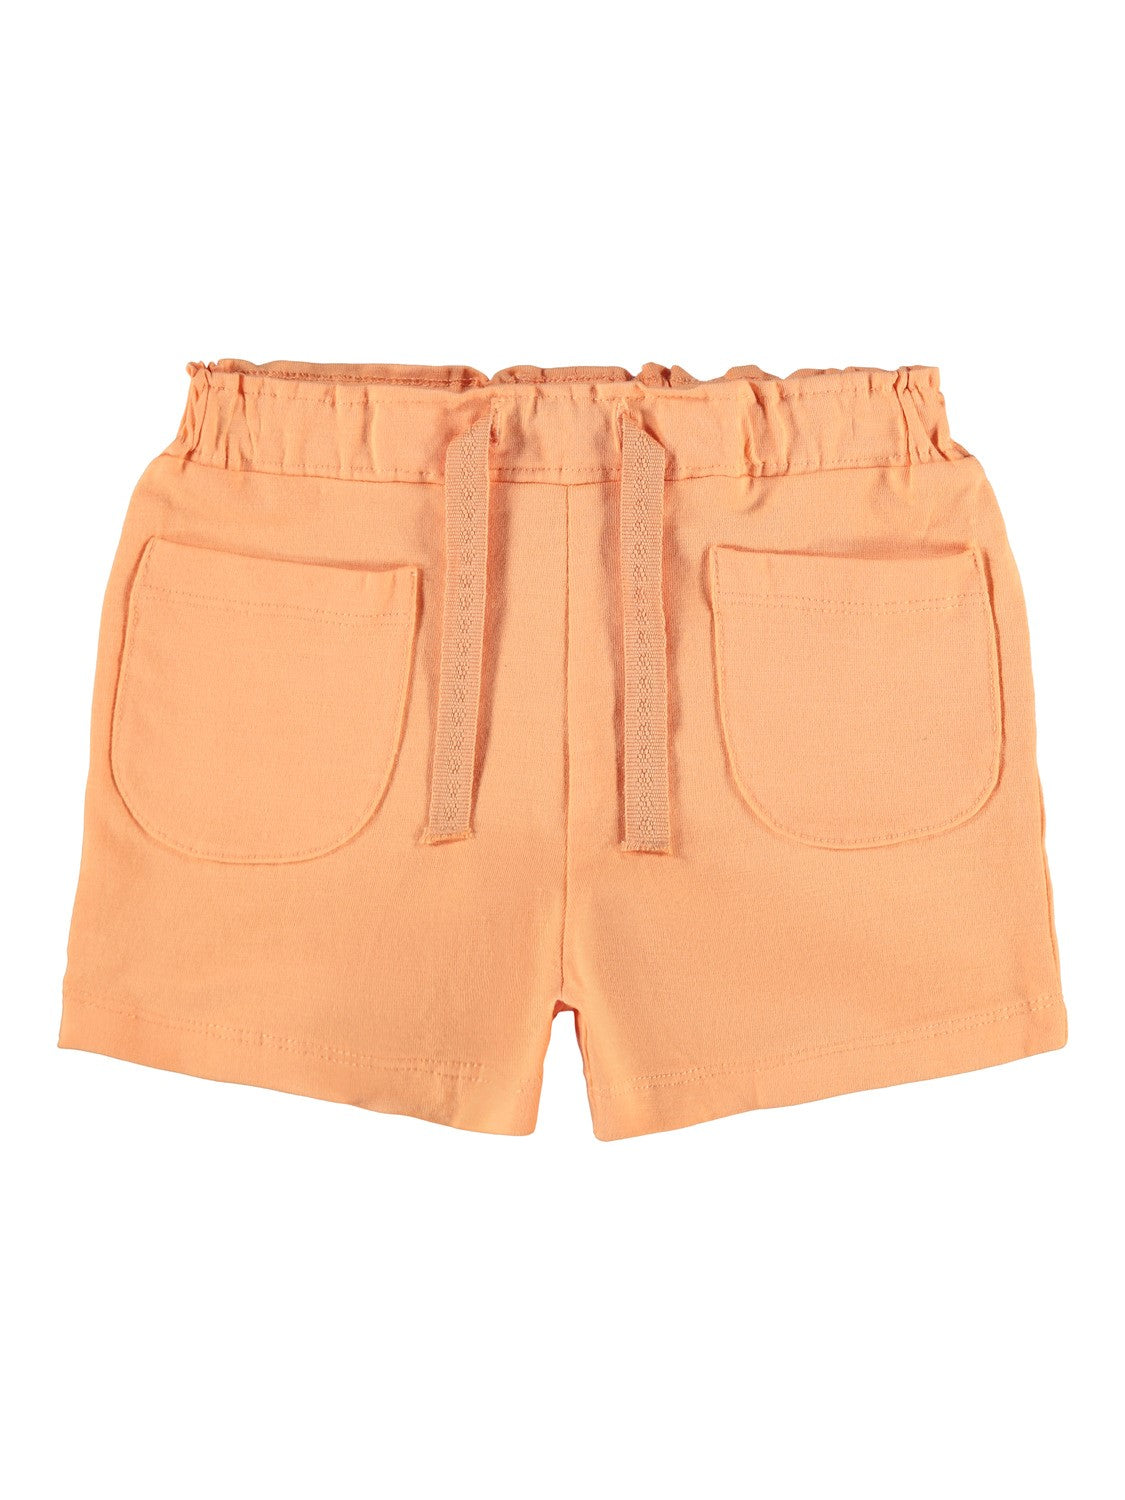 Name it Girls Summer Cotton Shorts